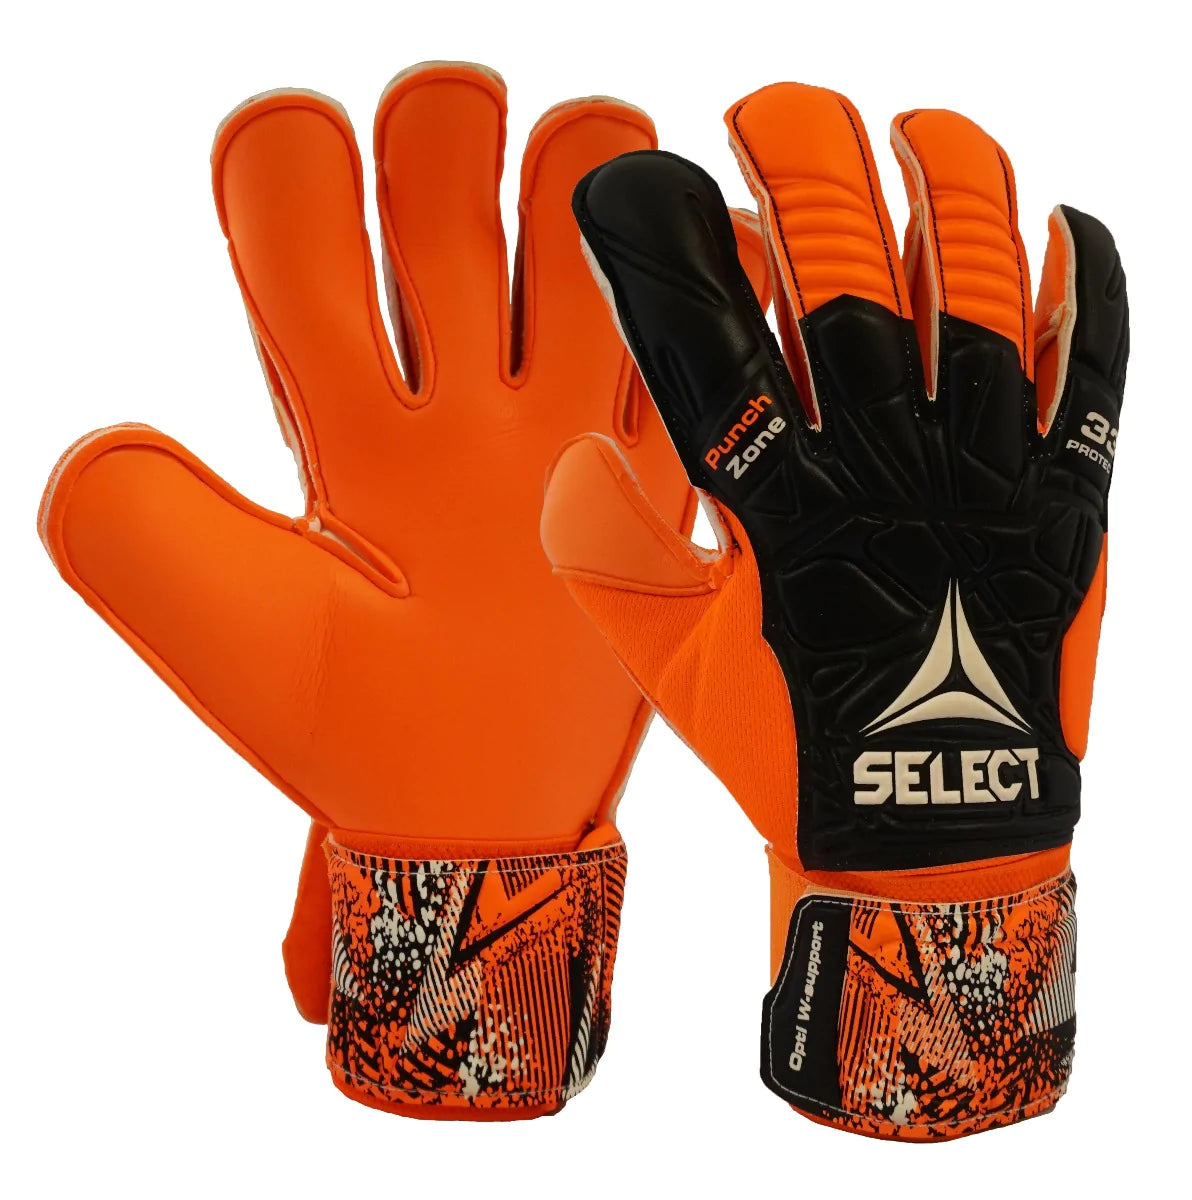 Select 33 Protec Hyla Cut Goalkeeper Gloves - Orange-Black